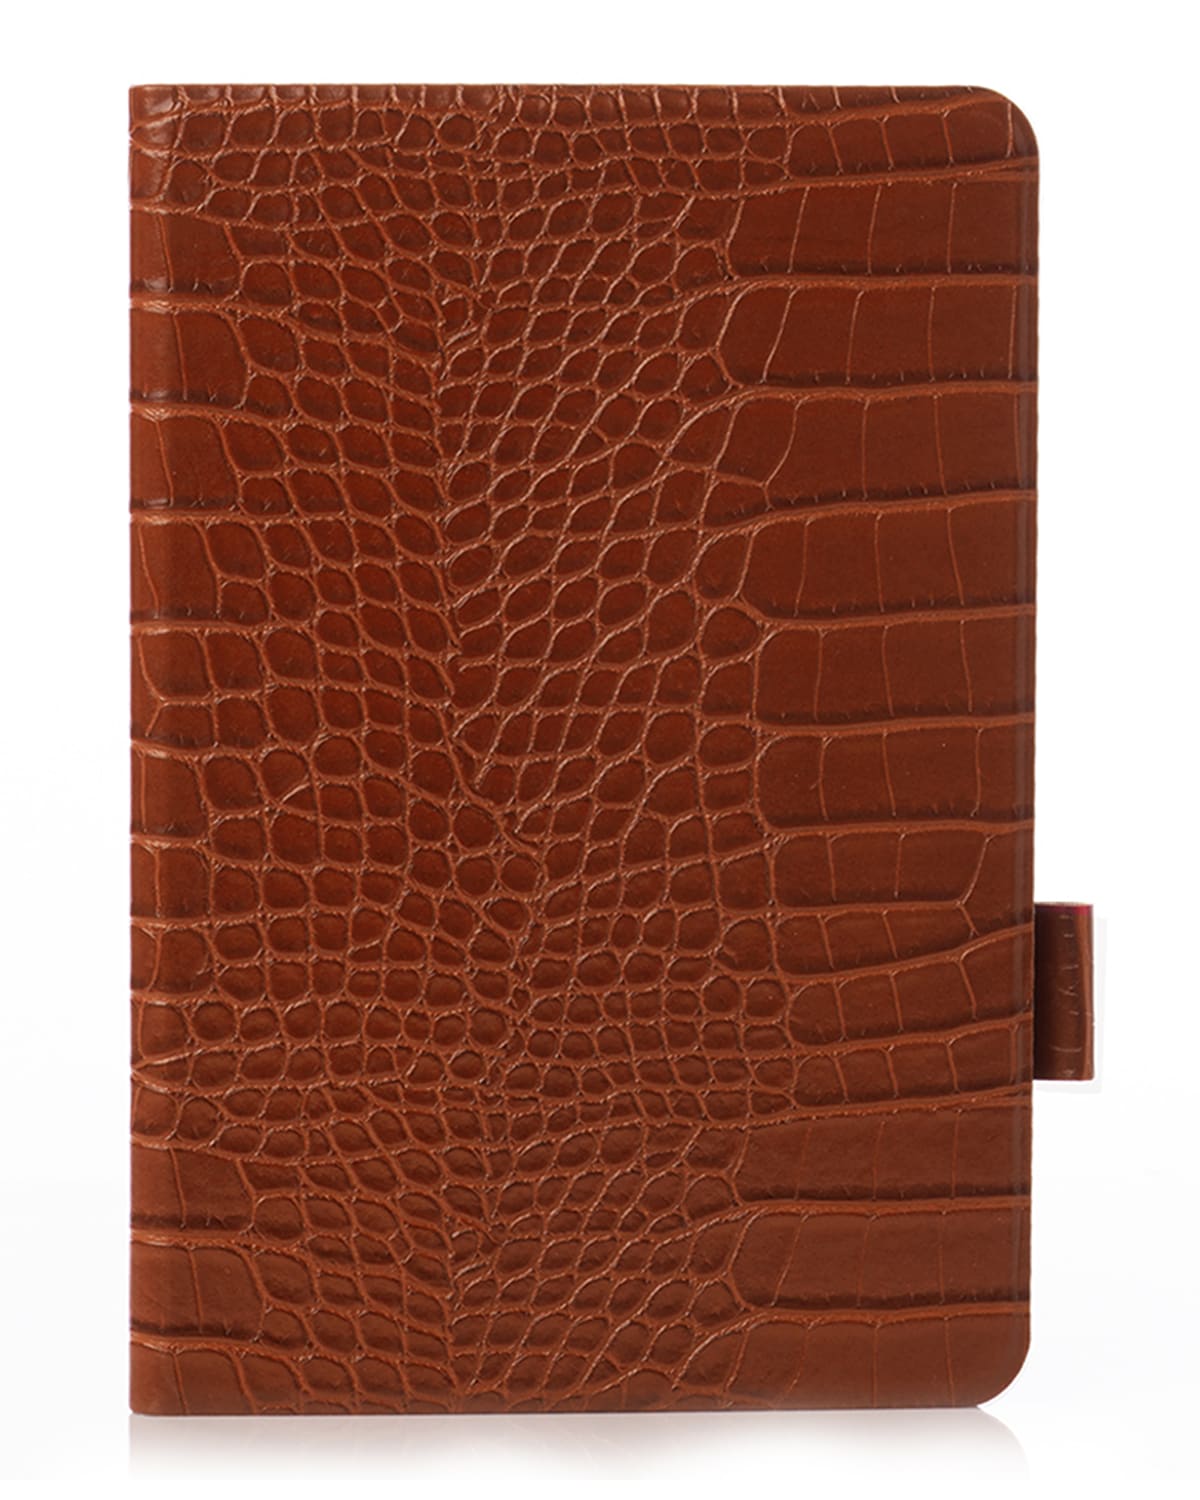 Faux Crocodile iPad Mini Case - 4th & 5th Generation | Neiman Marcus